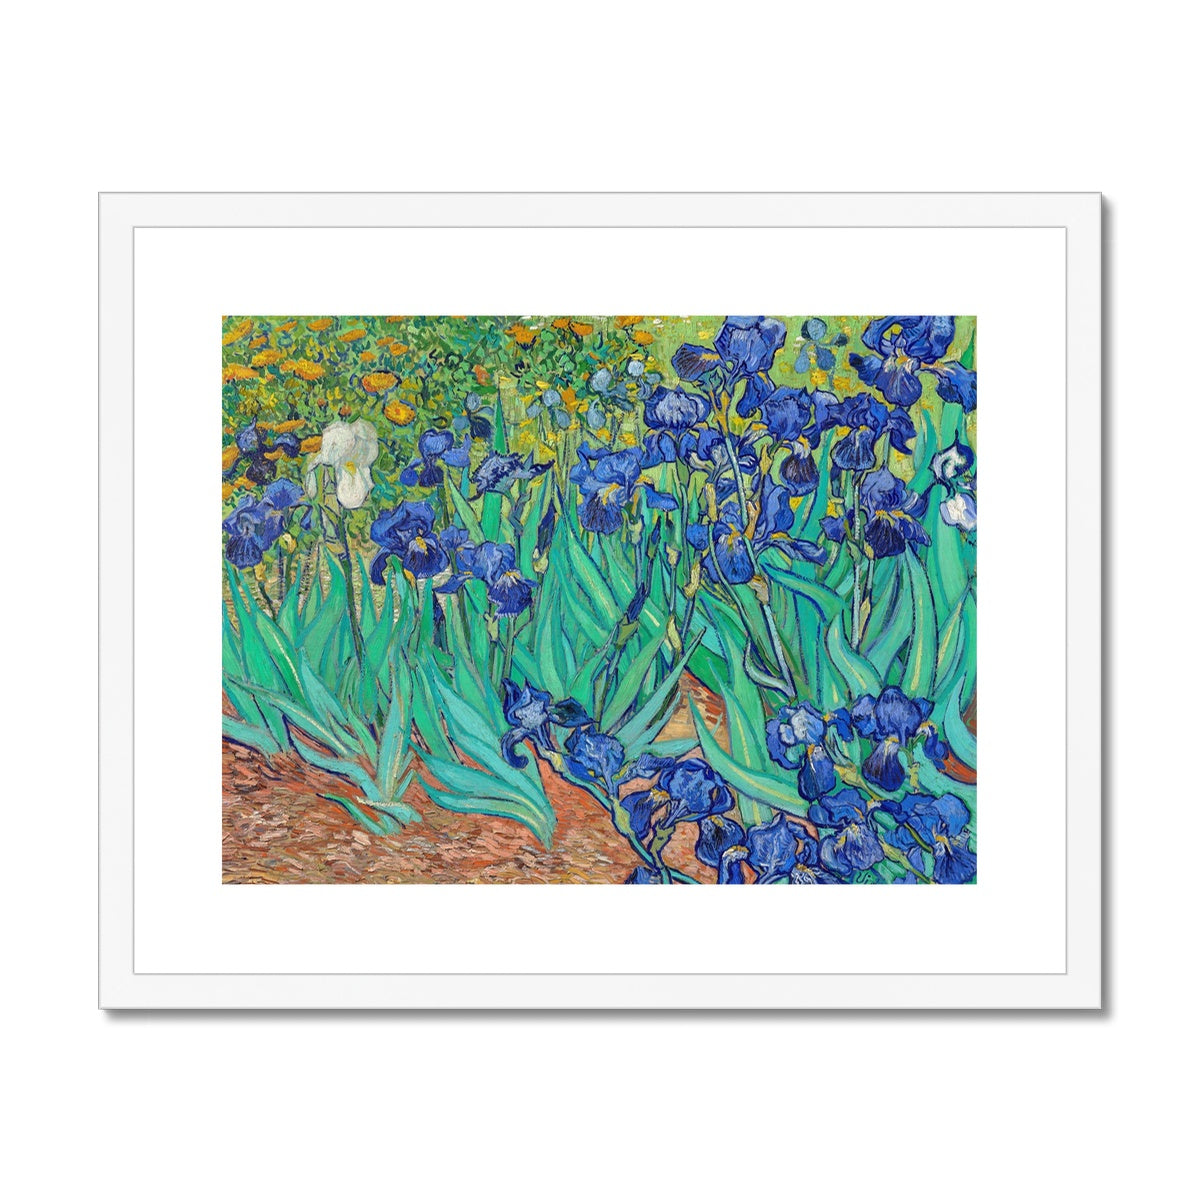 Vincent Van Gogh Framed Open Edition Art Print. 'Irises'. Art Gallery Historic Art